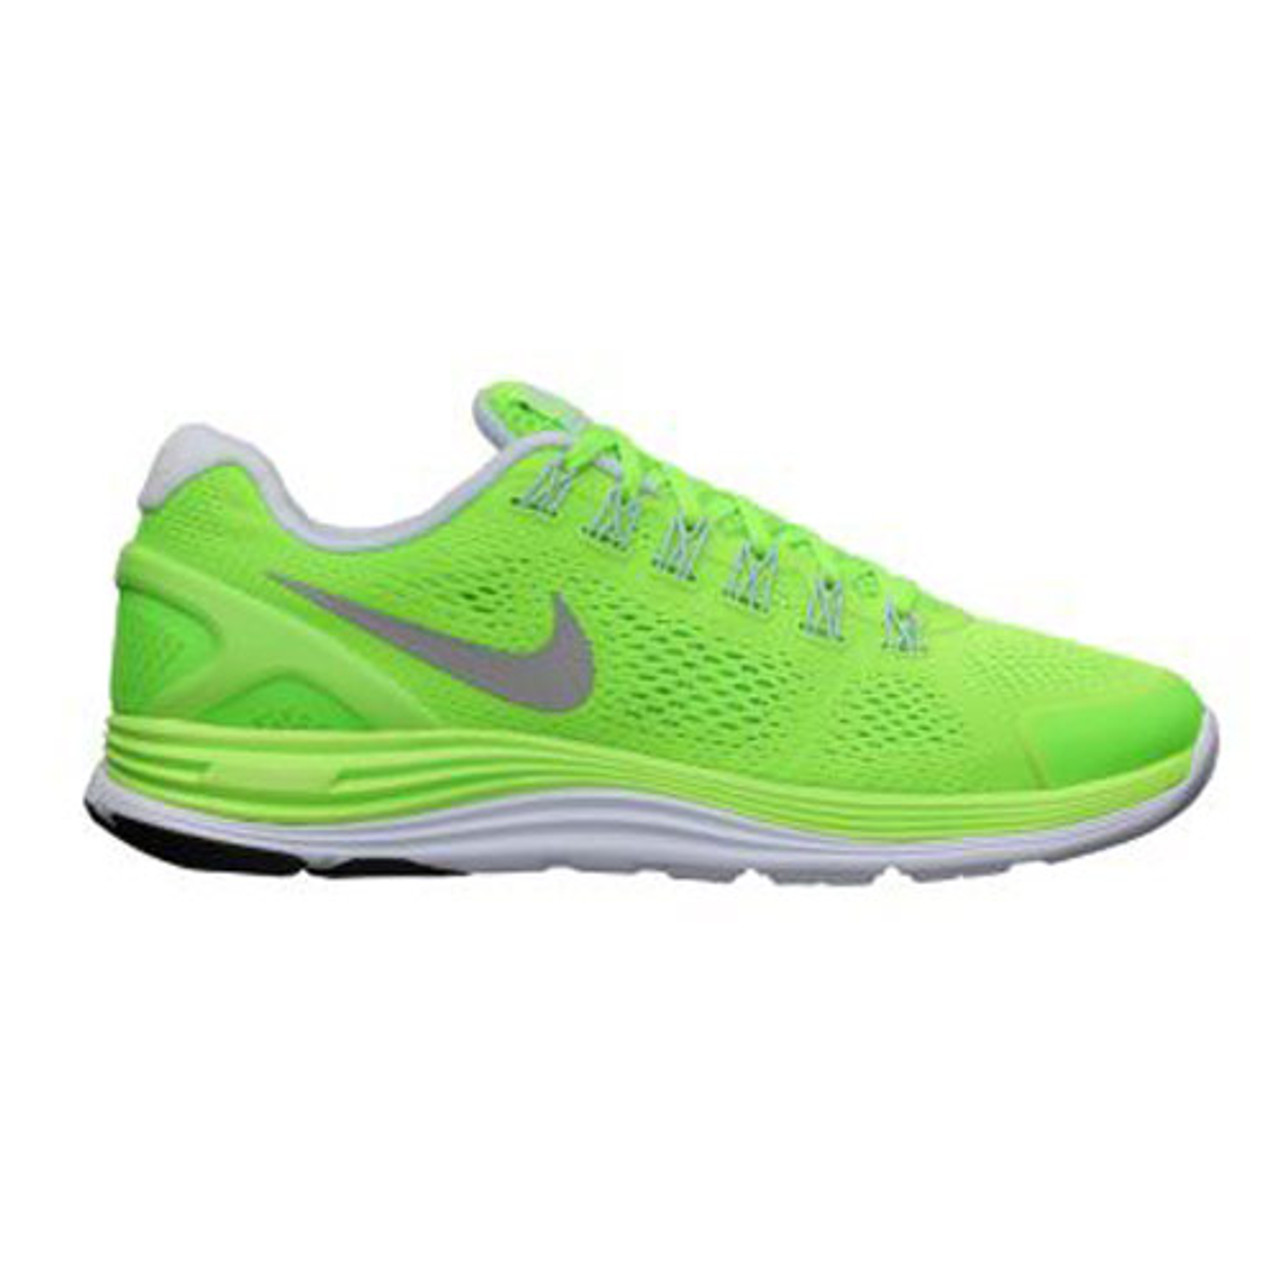 Lunarglide + 4 Green - | Nike Men's Athletic & More - Shoolu.com Shoolu.com